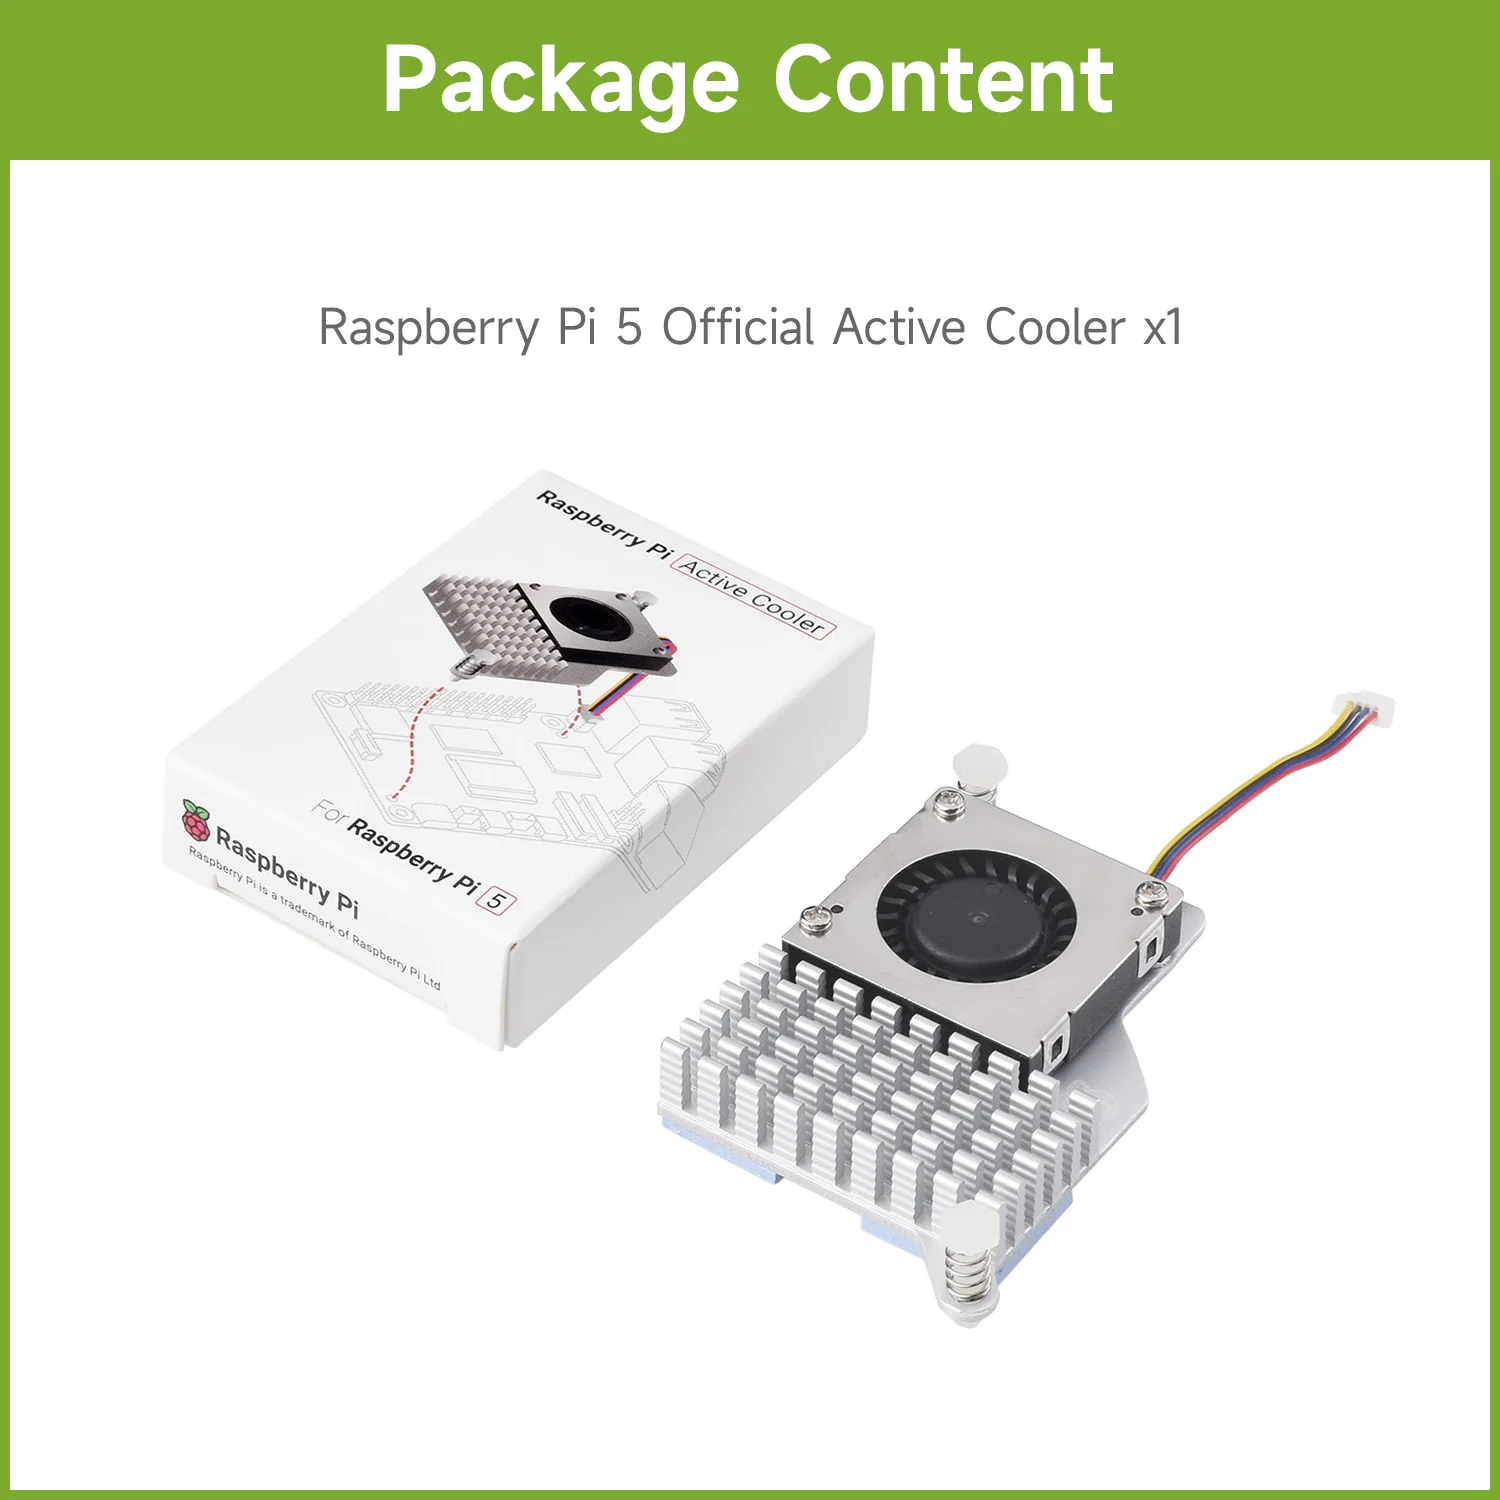 5 Active Cooler Heatsink/Fan - Raspberry Pi